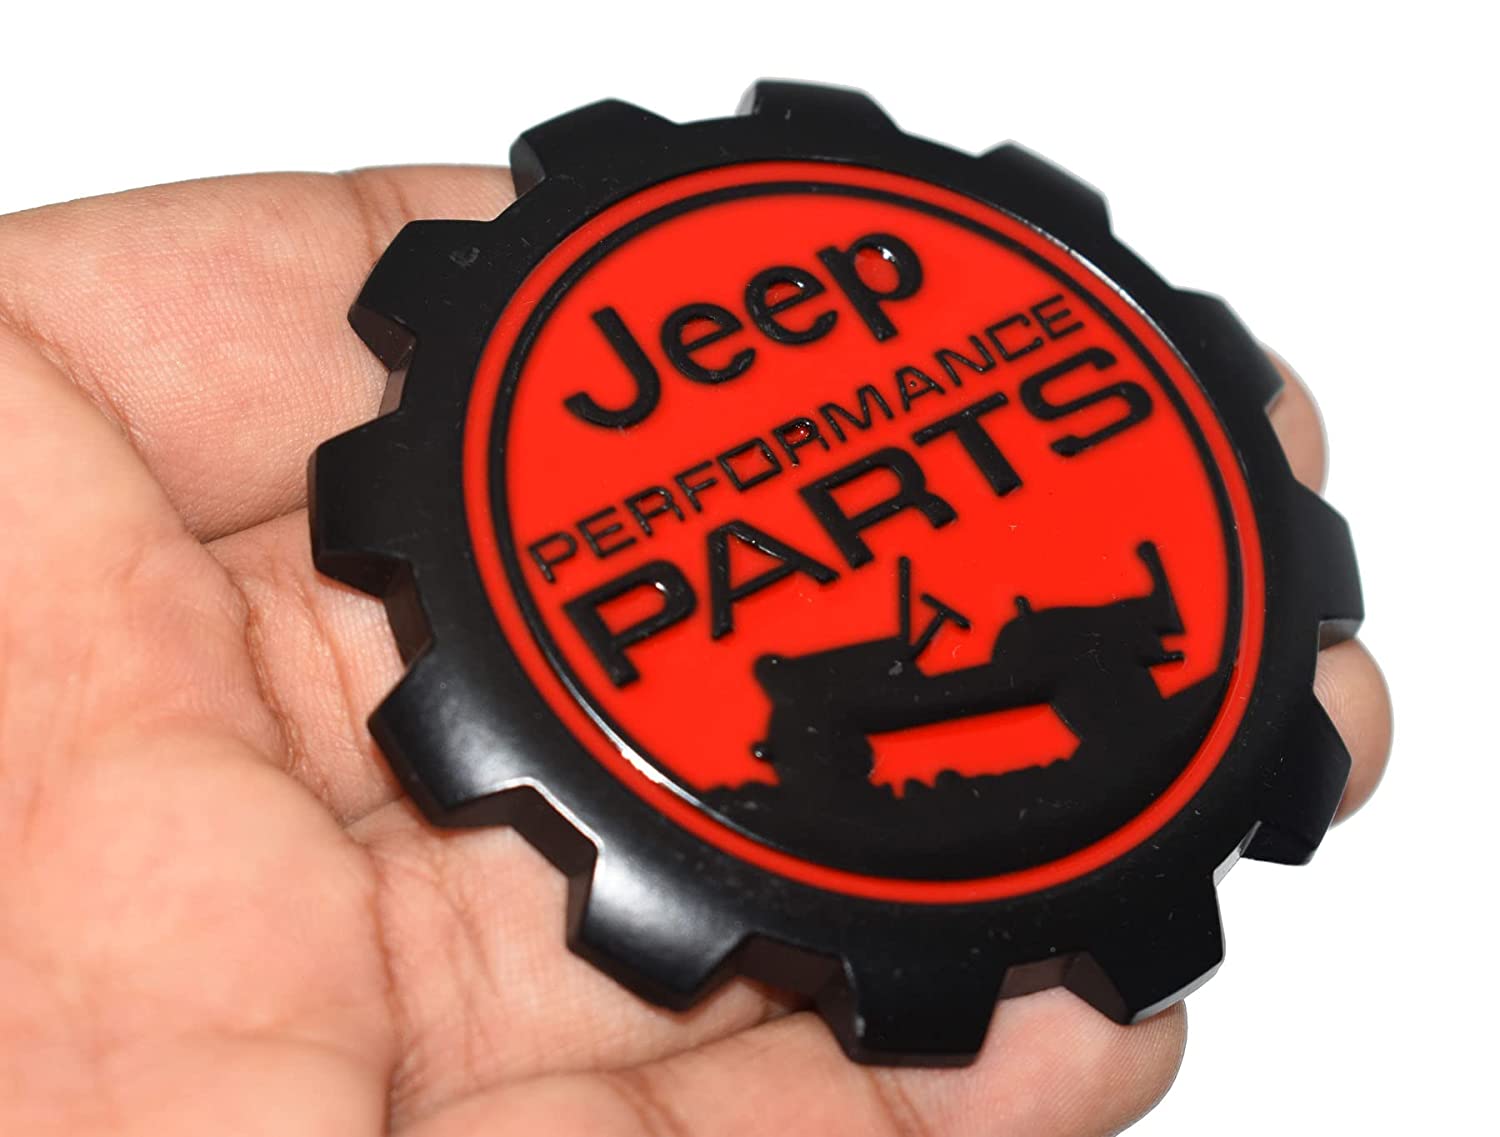 Metal Sign - Jeep Performance Gear Logo